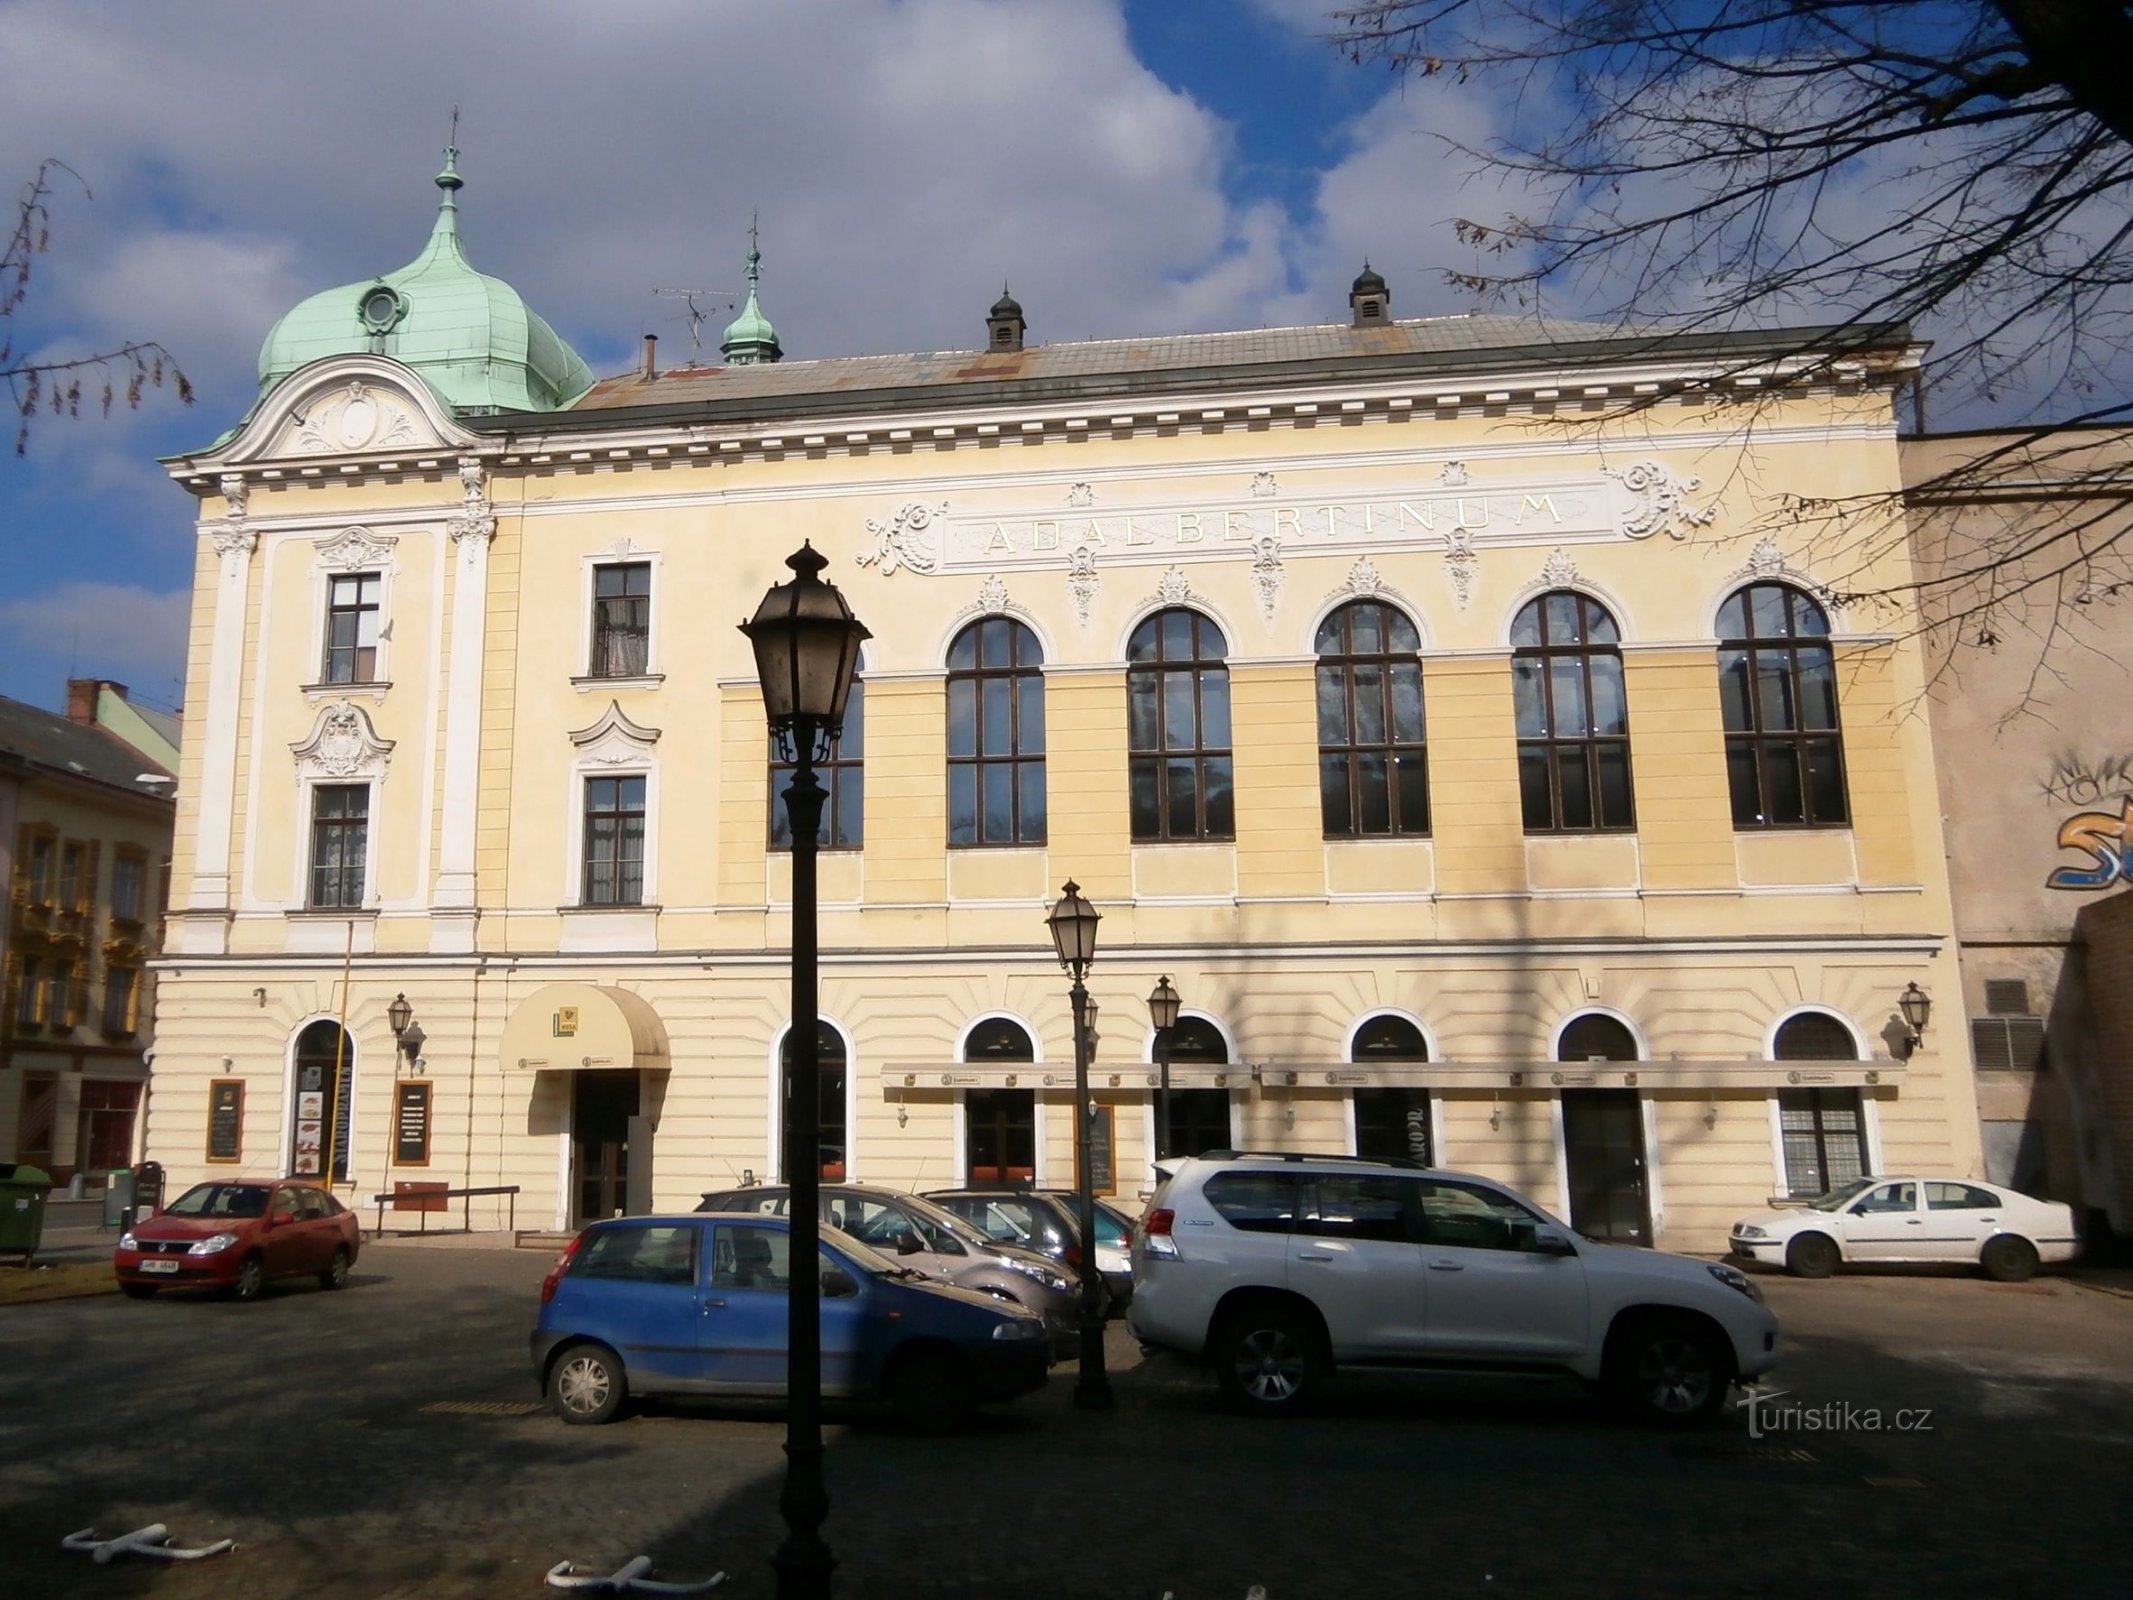 Adalbertinum (Hradec Králové, 1.3.2014 april XNUMX)